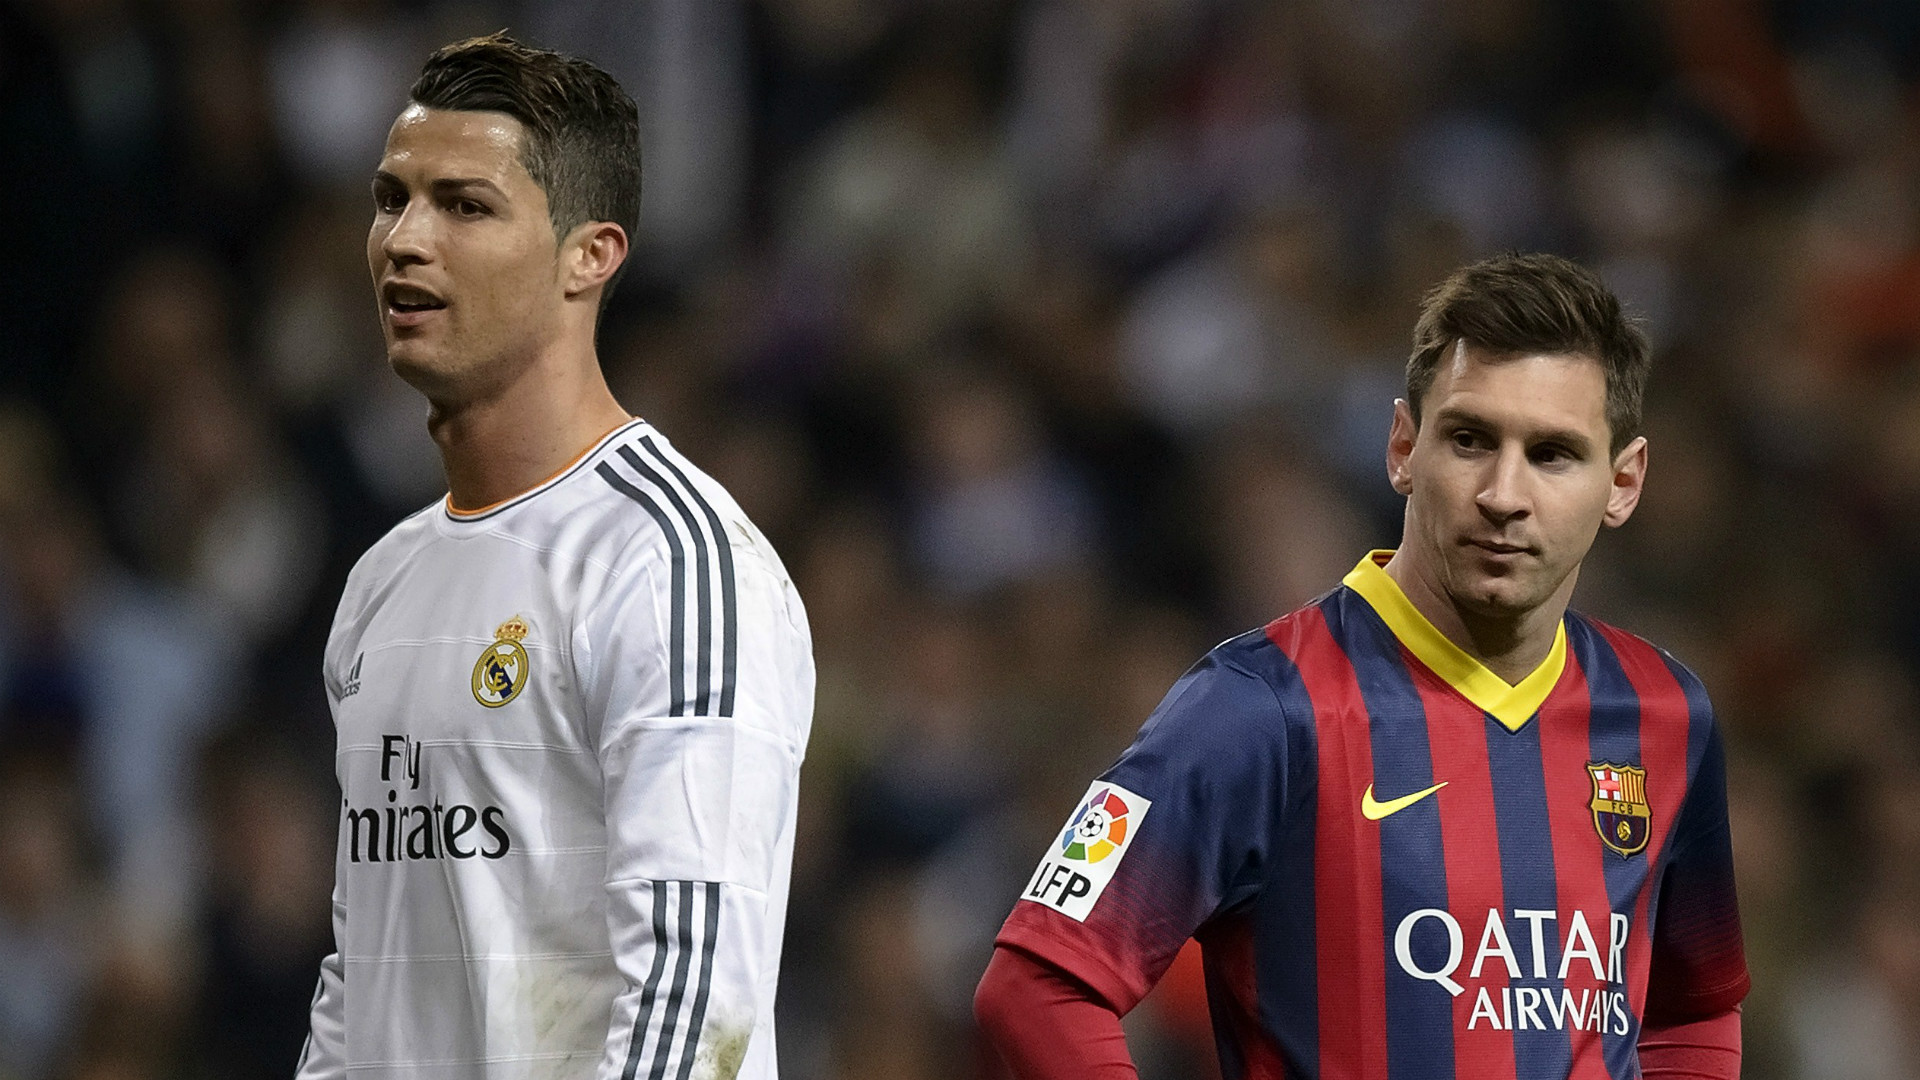 C.Ronaldo & L.Messi Together  Messi vs ronaldo, Messi and ronaldo, Messi  and ronaldo wallpaper